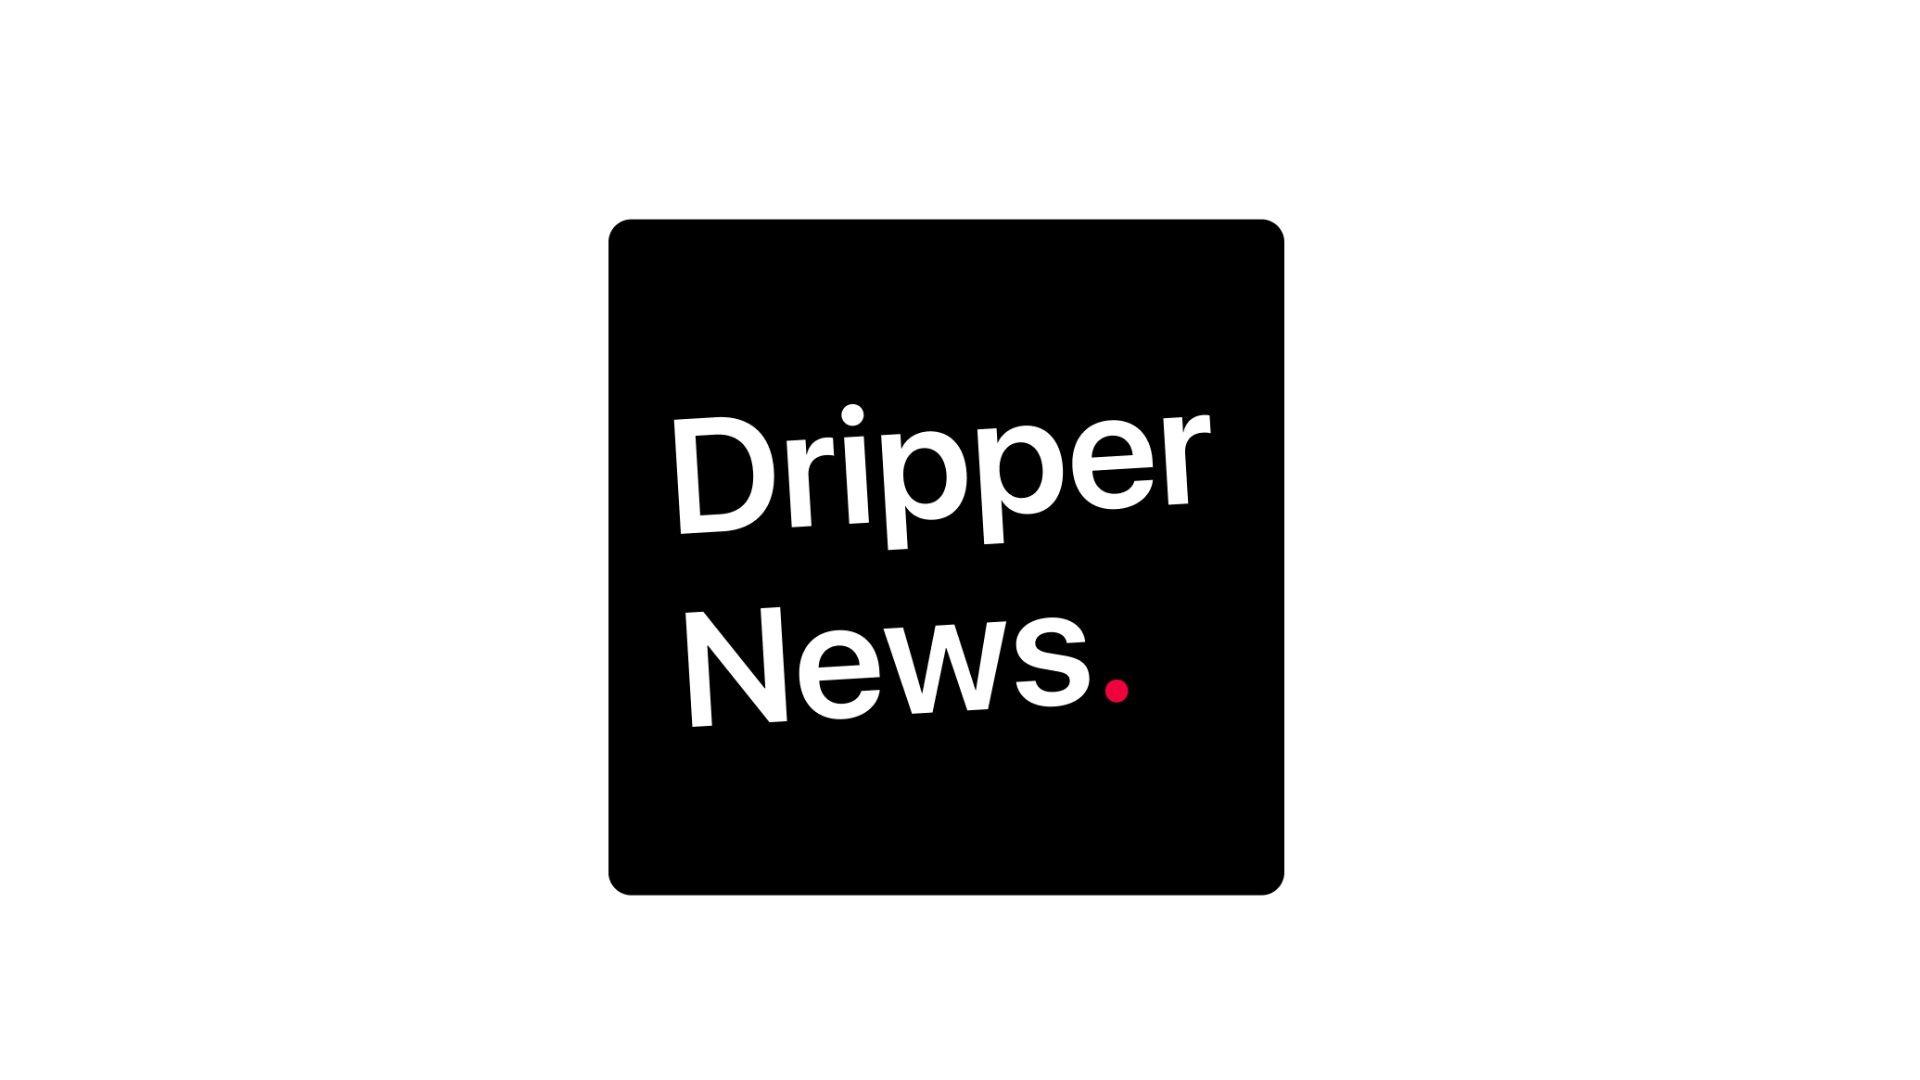 Dripper News